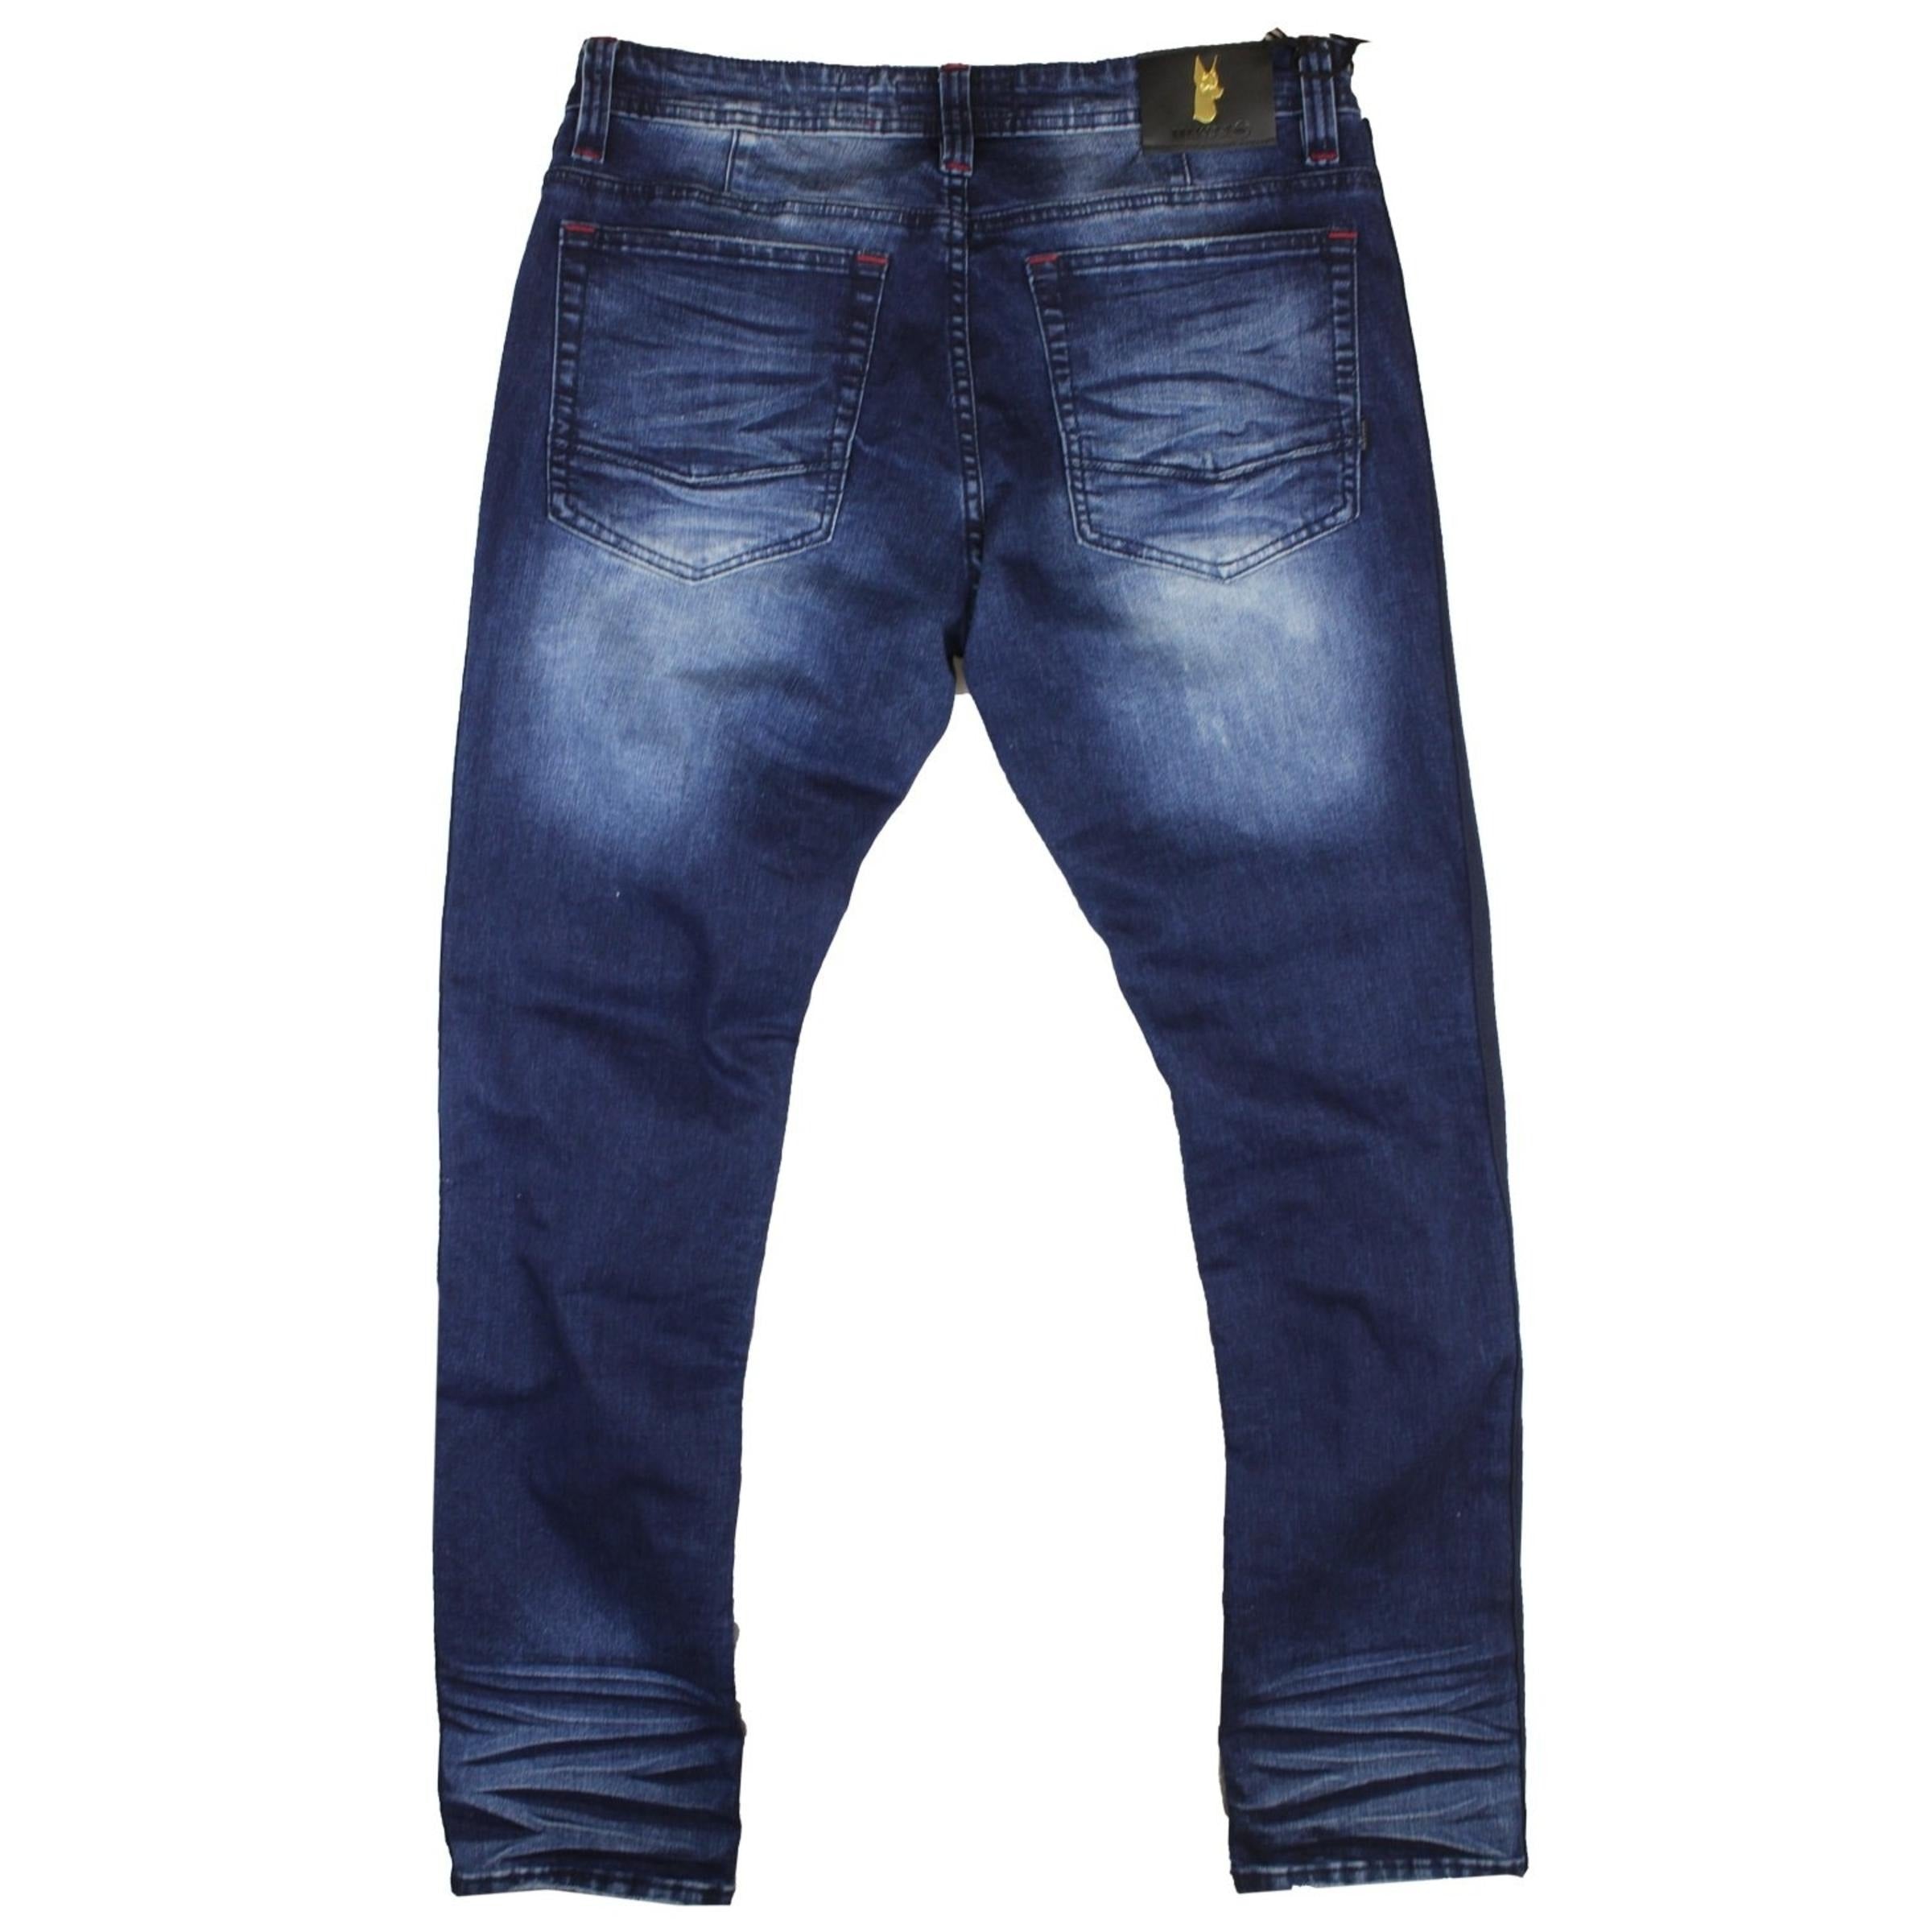 Makobi Men's Dark Wash Denim Jeans